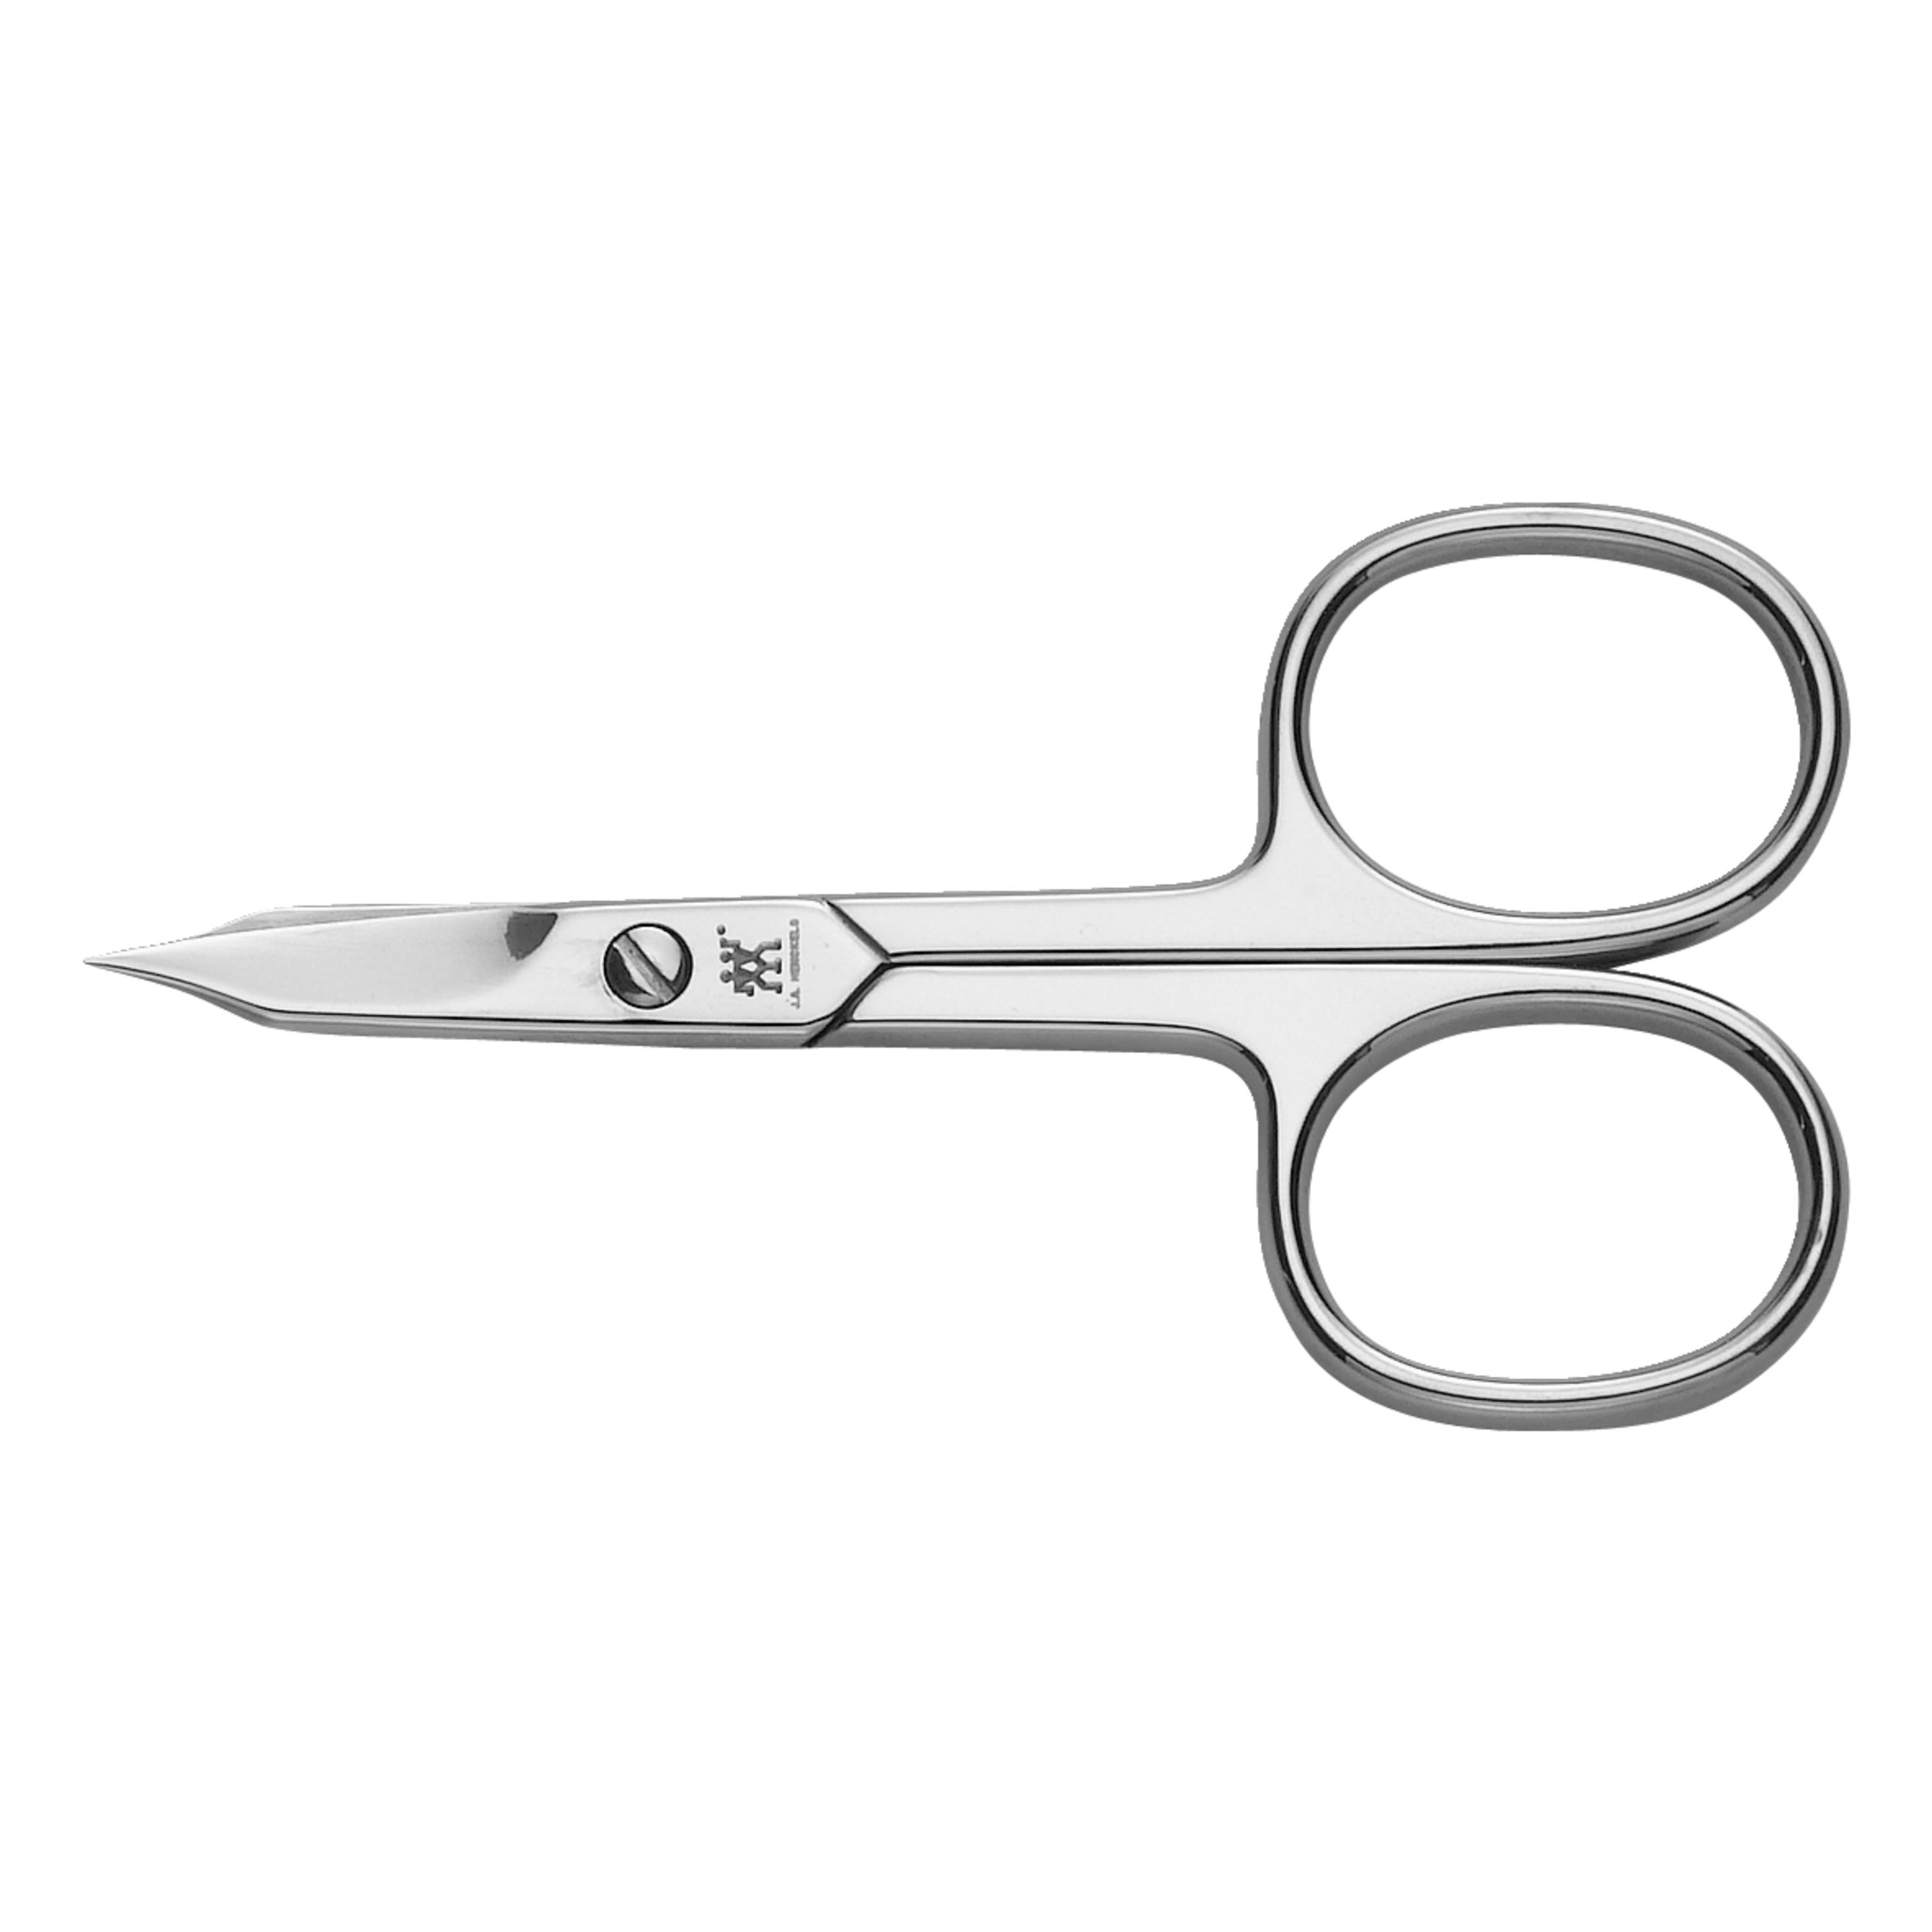 henckels nail scissors